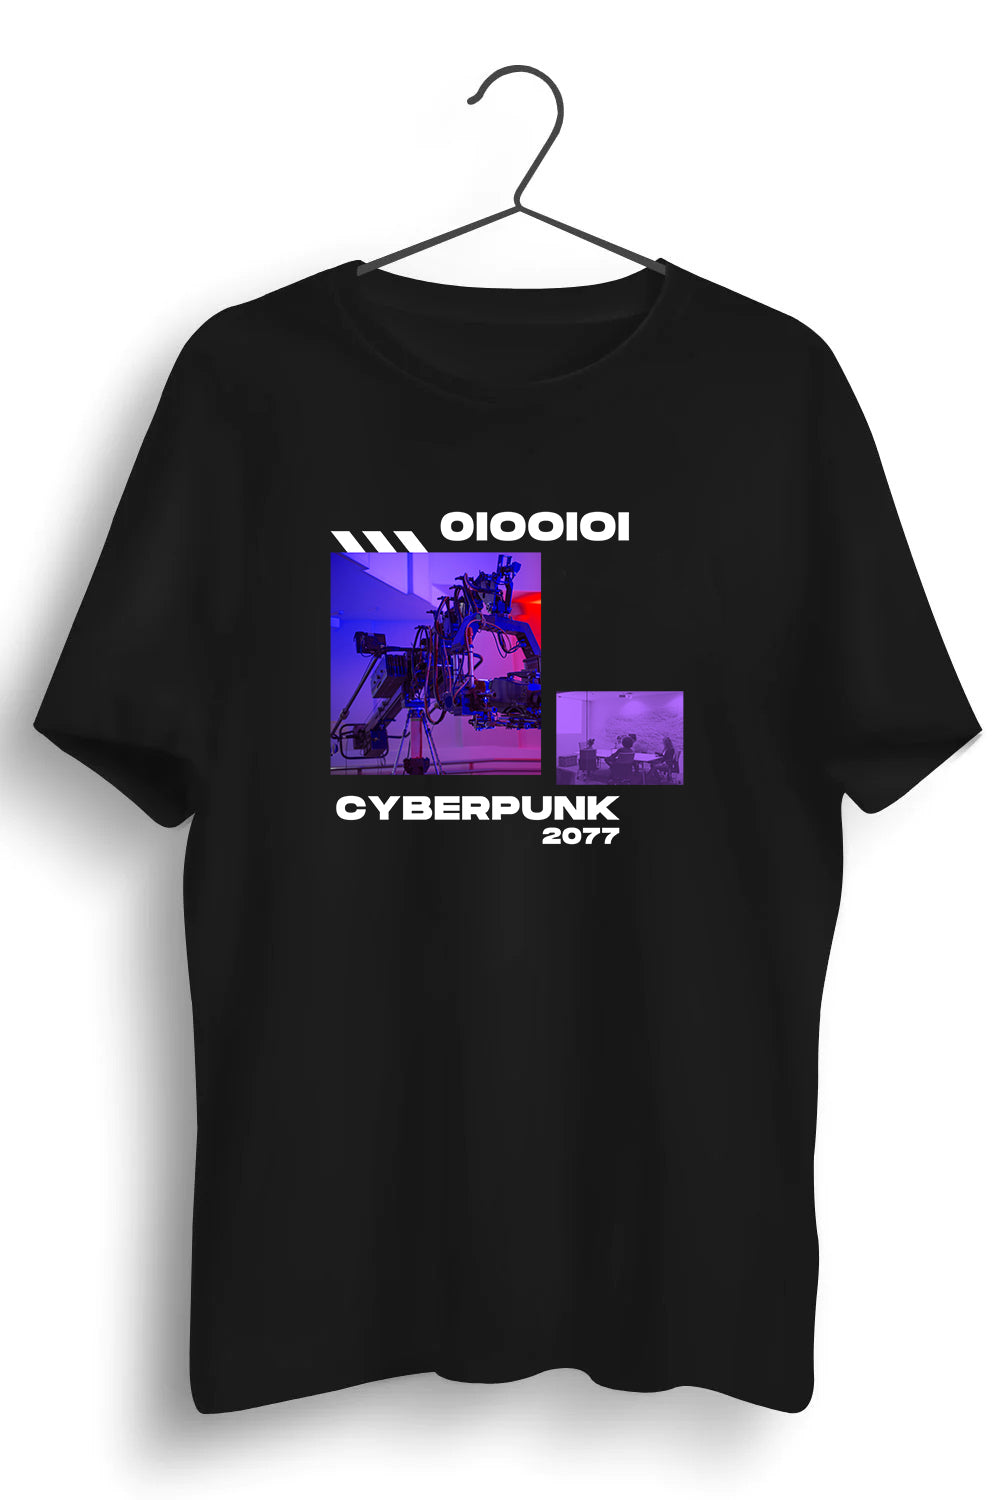 Cyberpunk 2077 Graphic Printed Black Tshirt